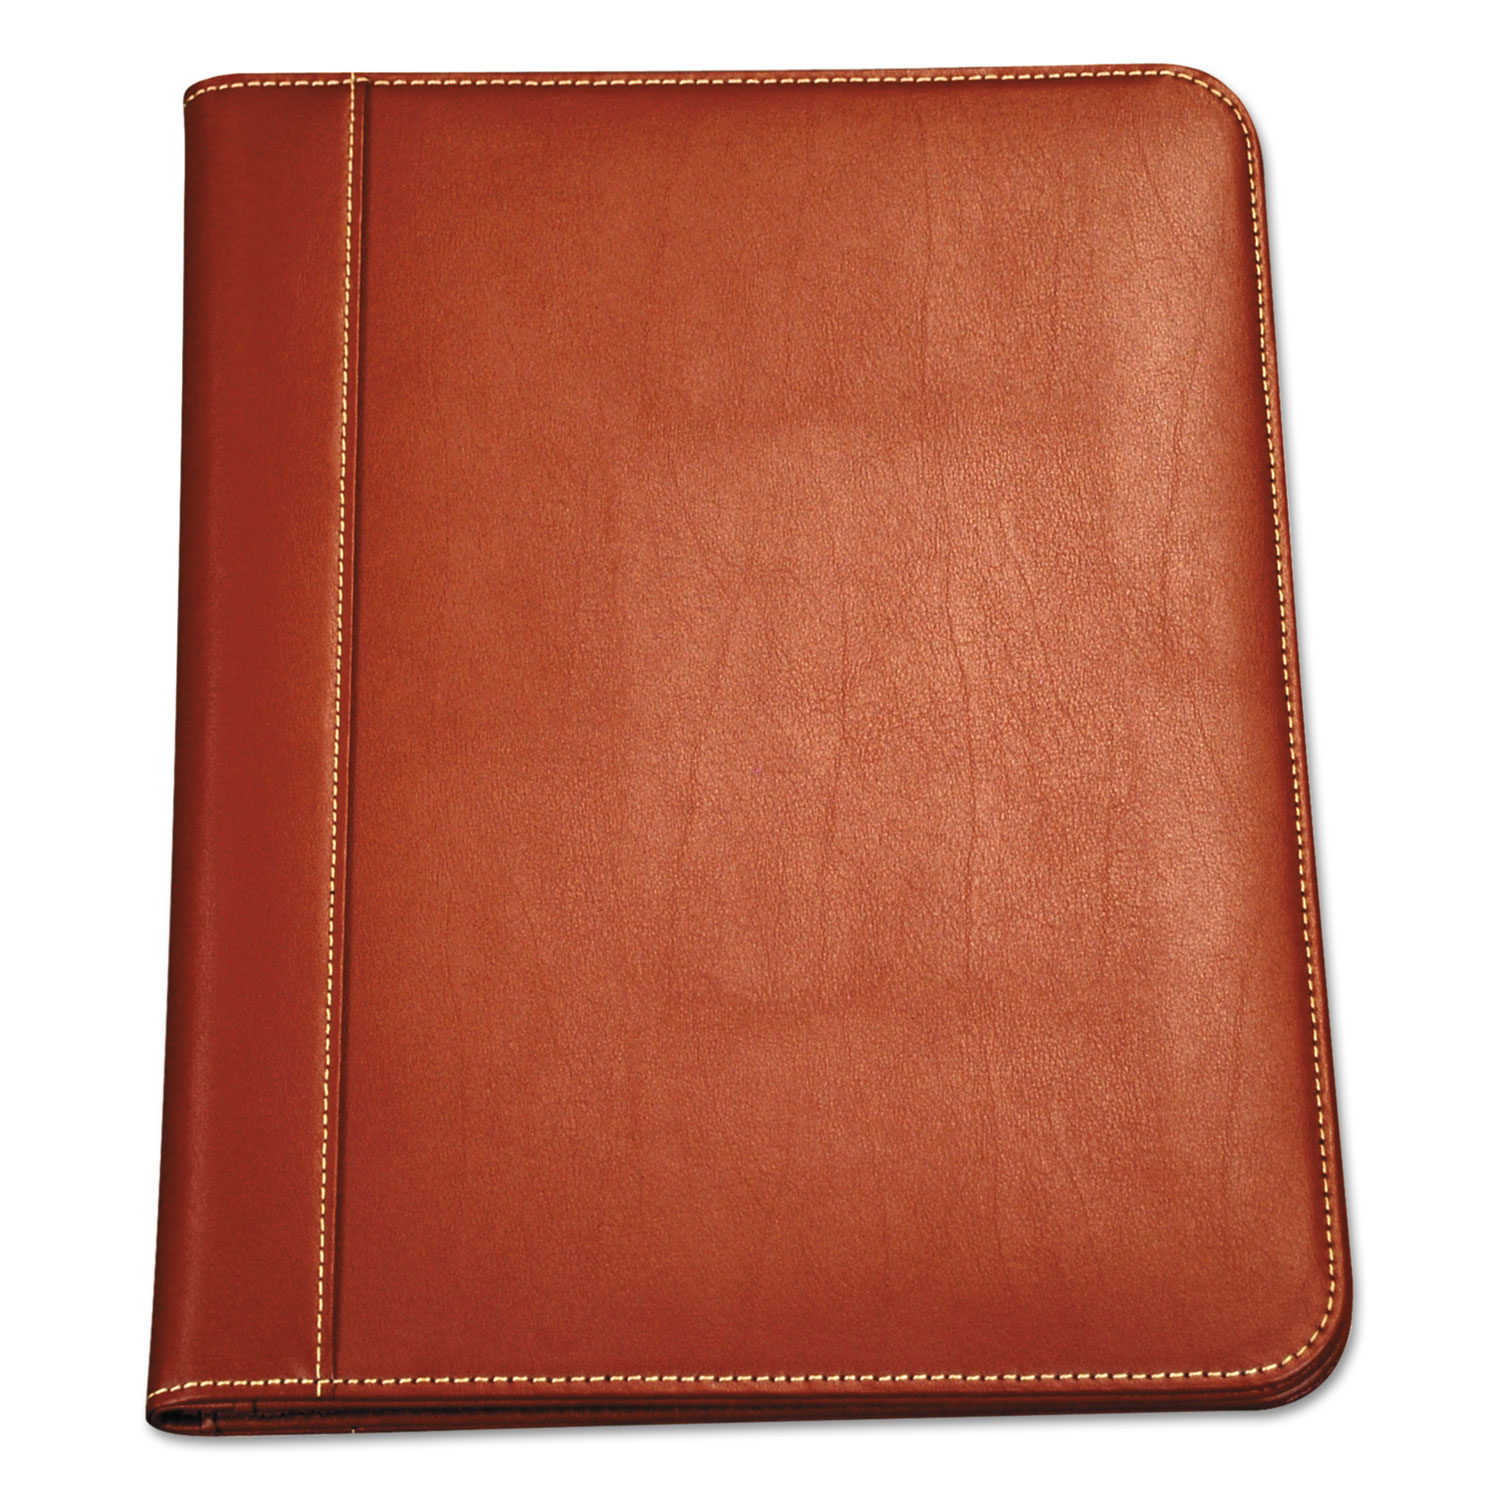 Contrast Stitch Leather Padfolio, 8 1/2 x 11, Leather, Tan